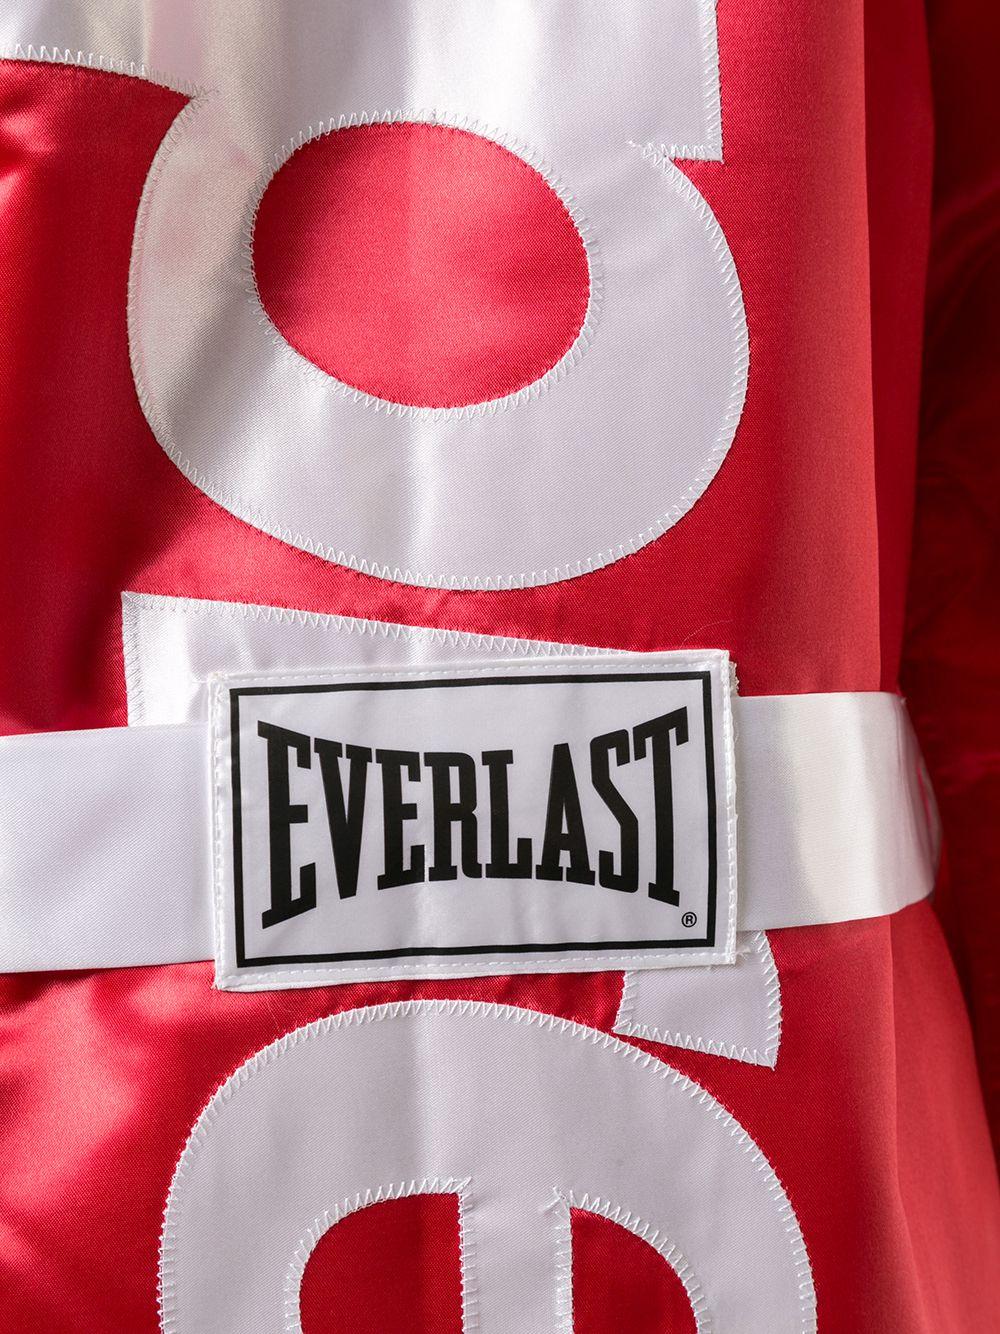 Supreme Everlast Boxing Glove Hoodie Crewneck box logo shirt for